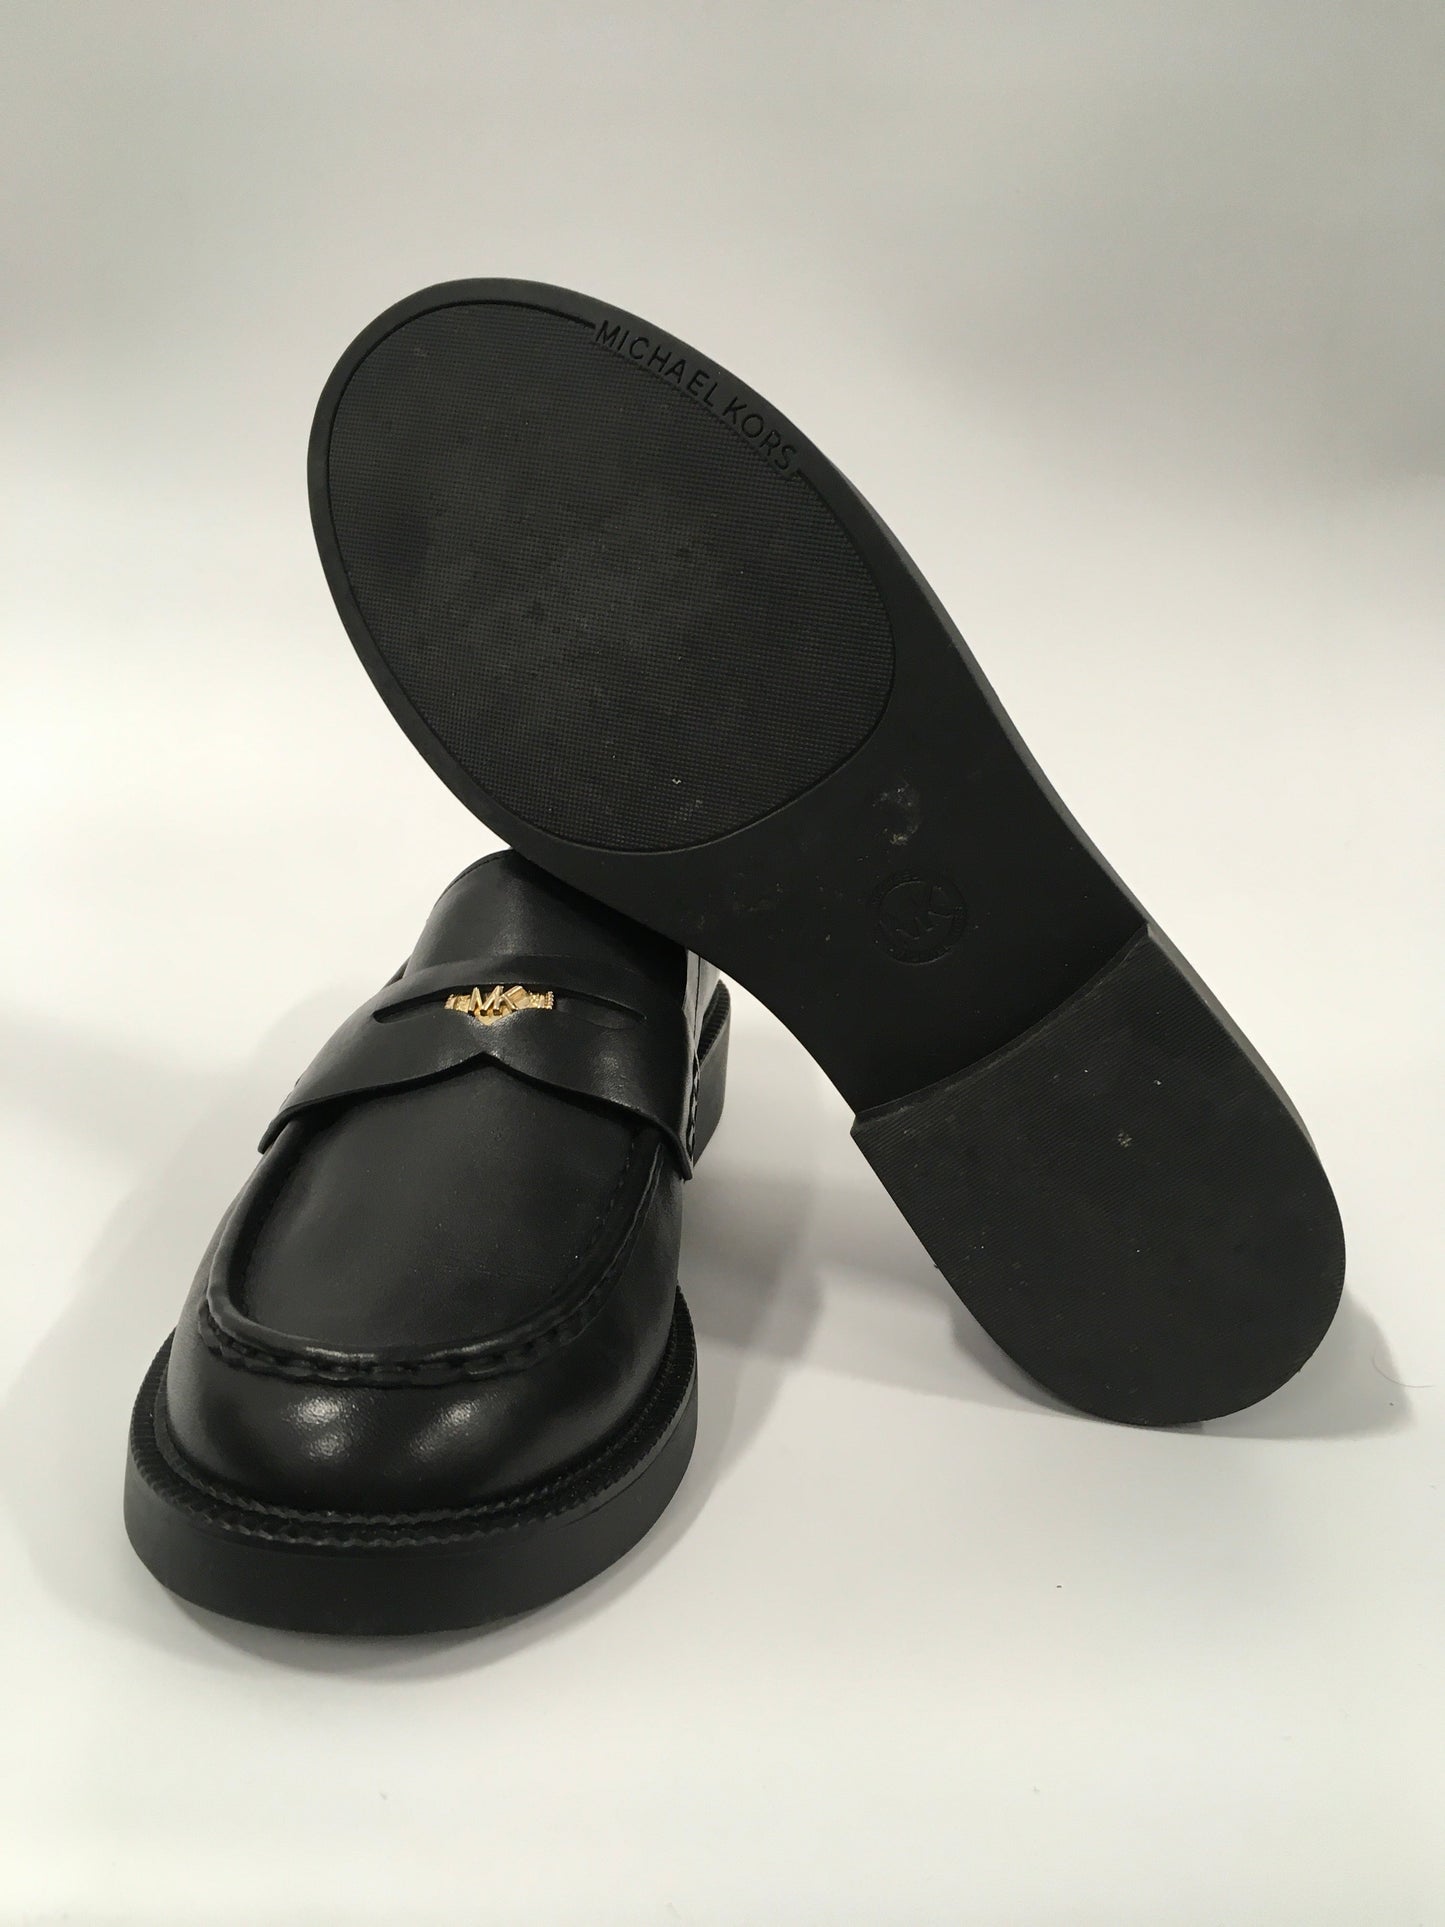 Black Shoes Flats Loafer Oxford Michael Kors, Size 9